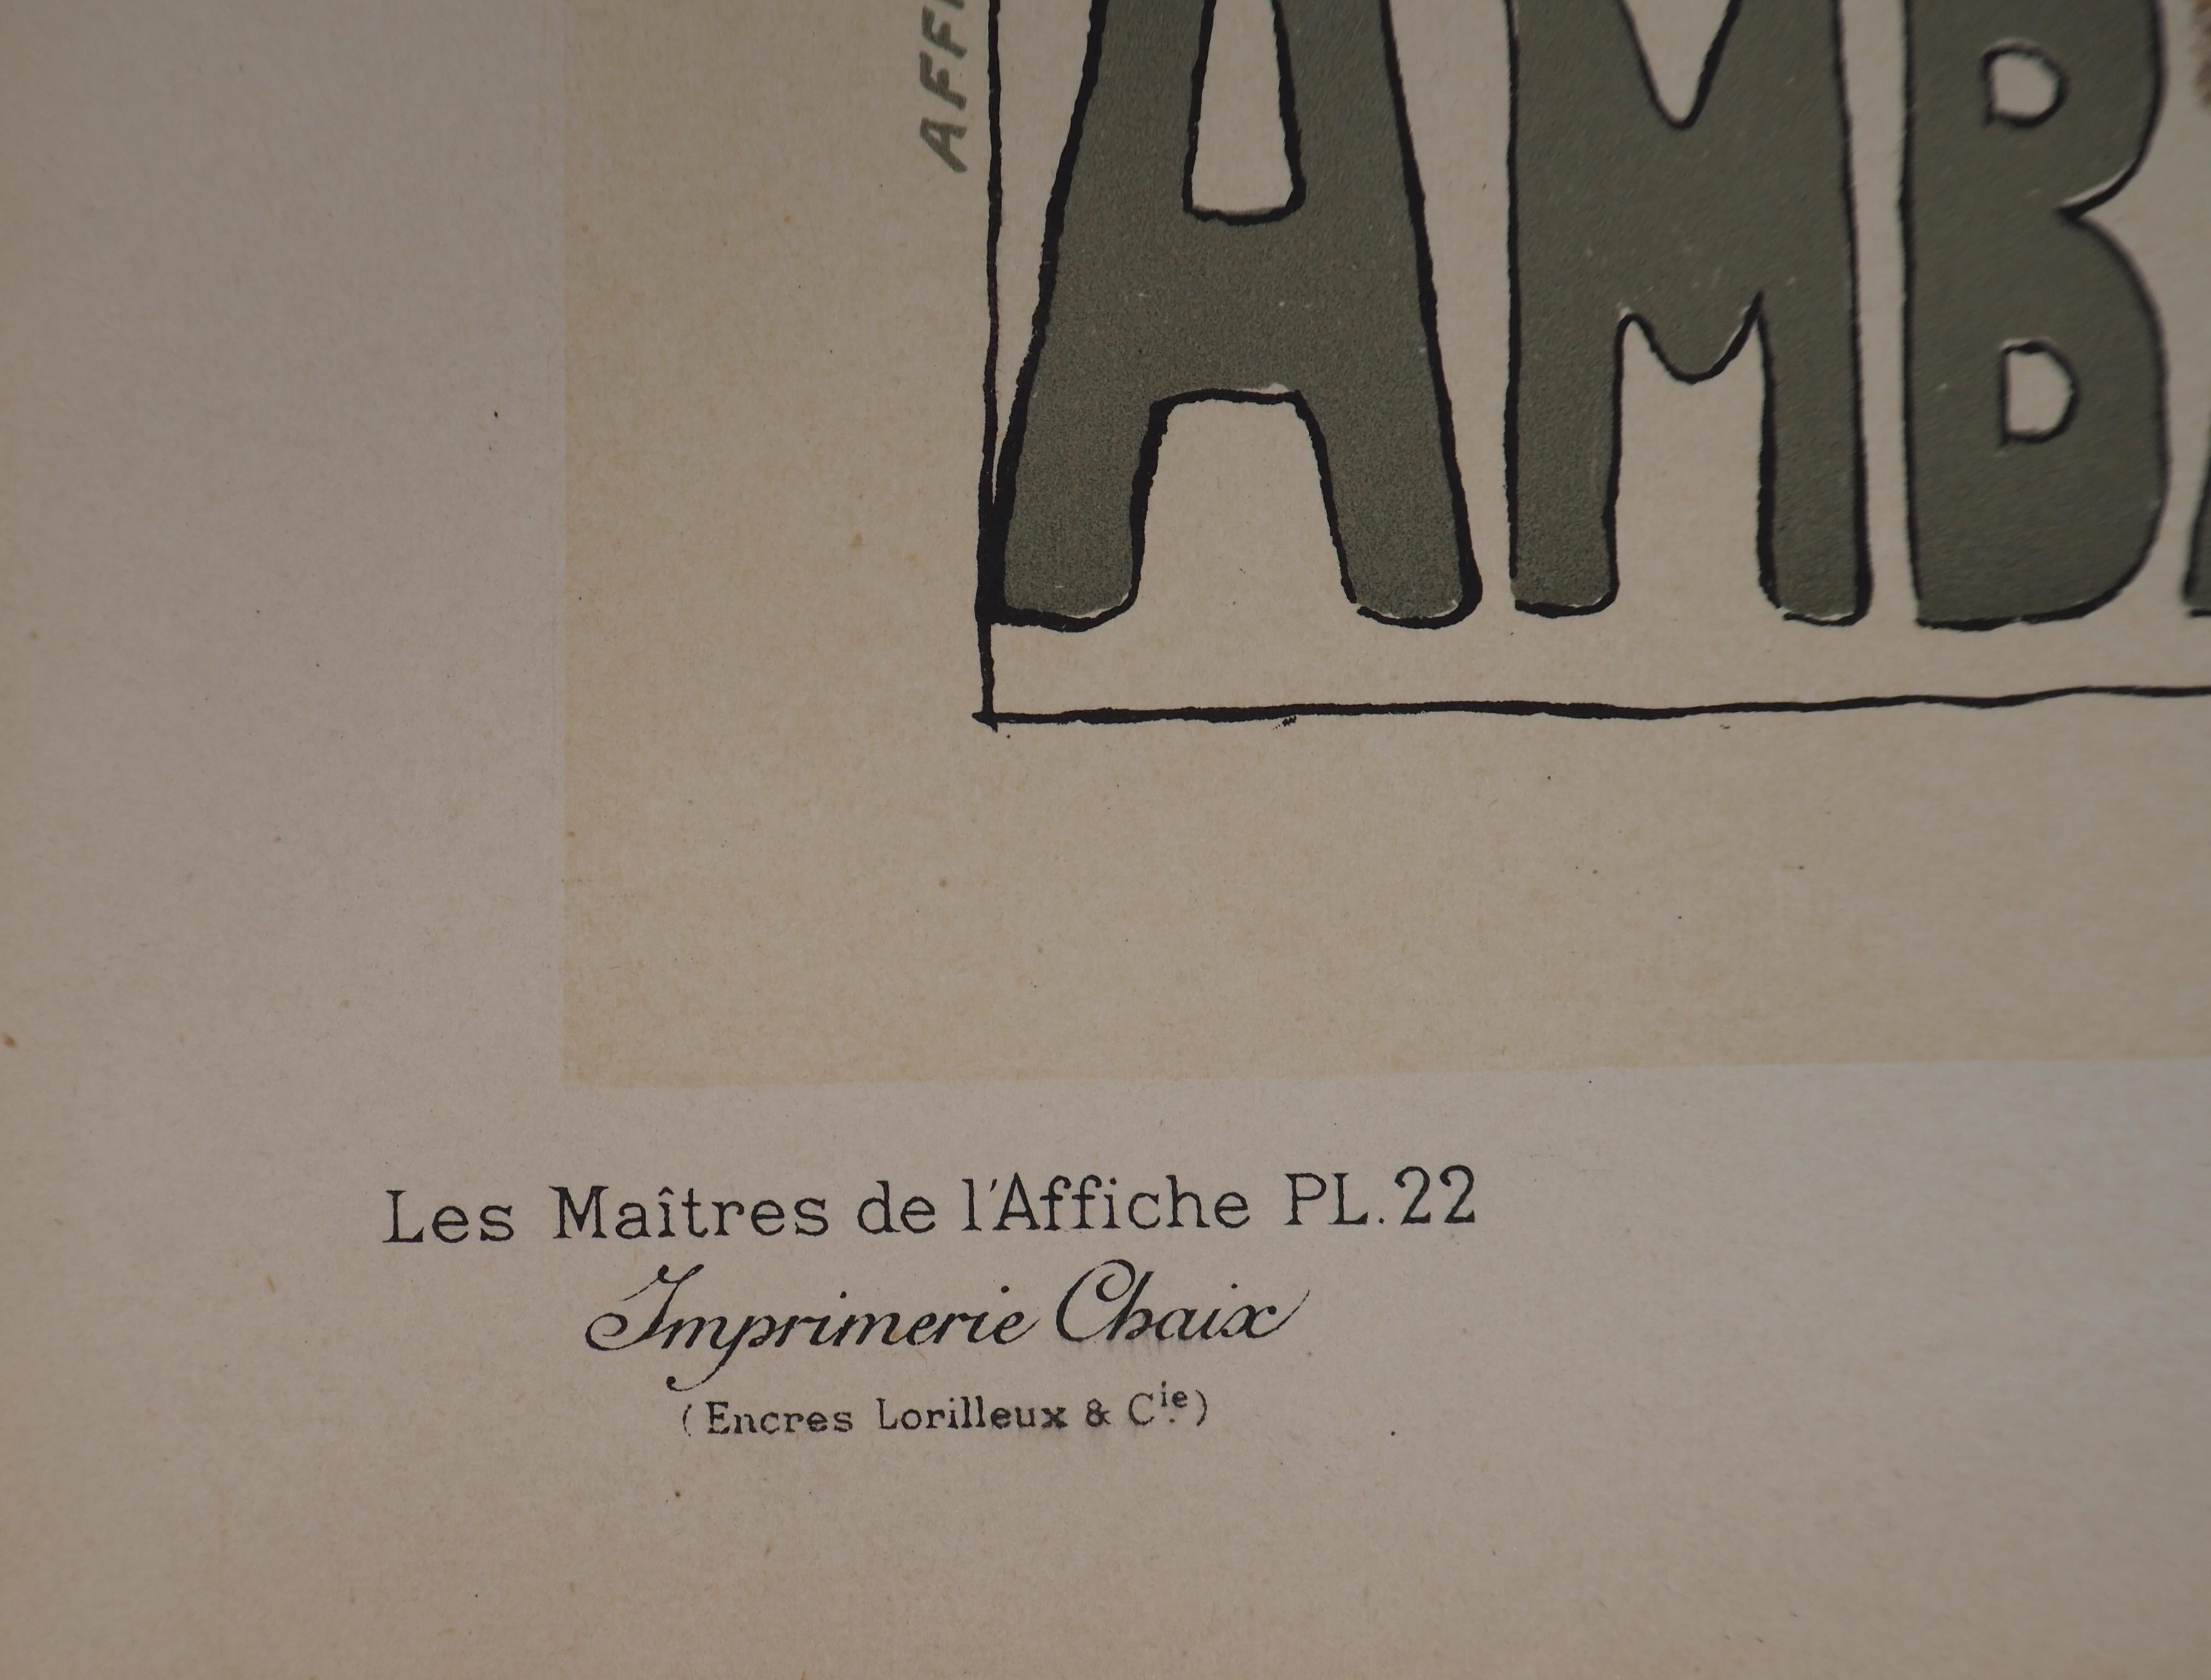 Lucien Métivet
Eugénie Buffet (Ambassadeurs)

Stone lithograph
Printed signature in the plate
On vellum 
Size 39 x 29 cm (c. 15.3 x 11.4